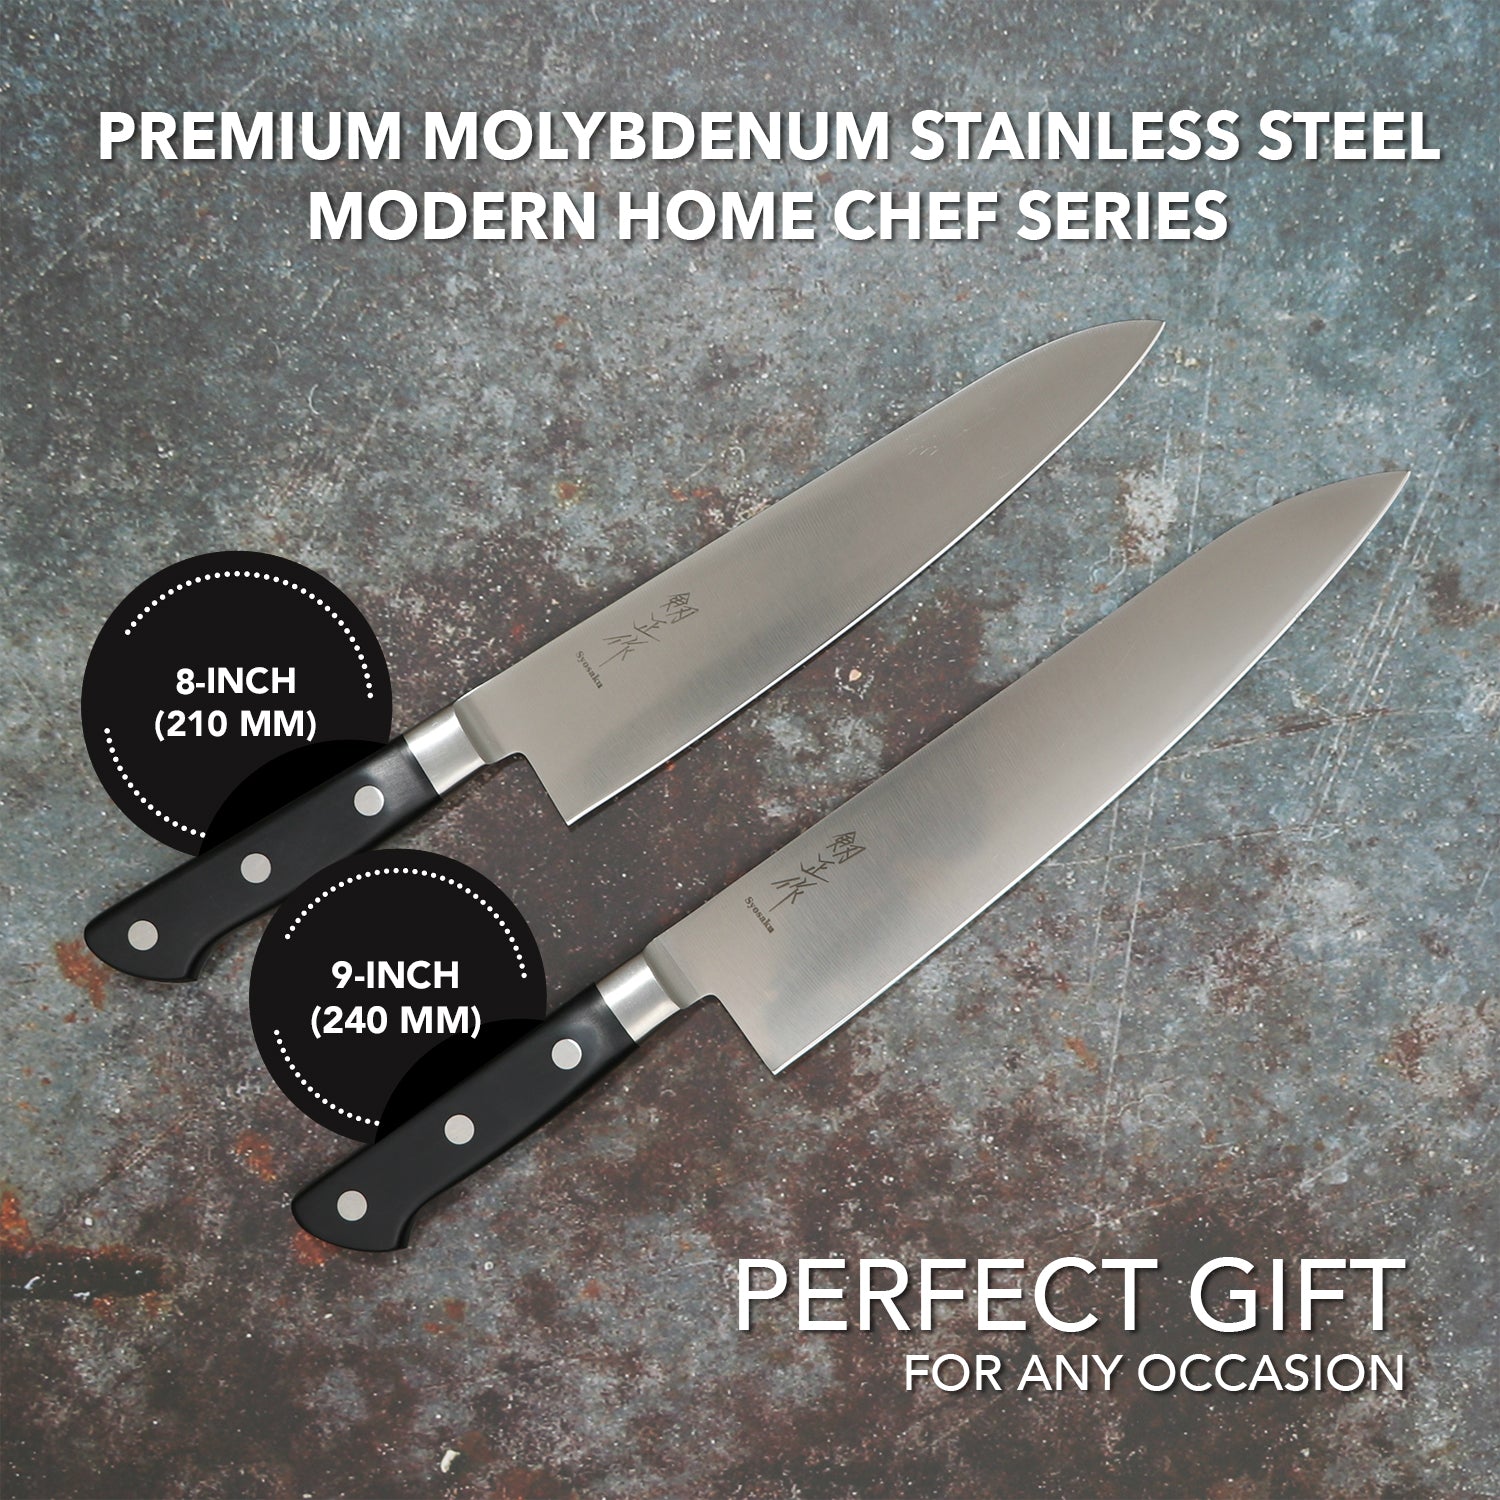 Syosaku Japanese Chef Knife Molybdenum Vanadium Stainless Steel with Bolster, Gyuto 7-Inch (180mm) Dishwasher Safe